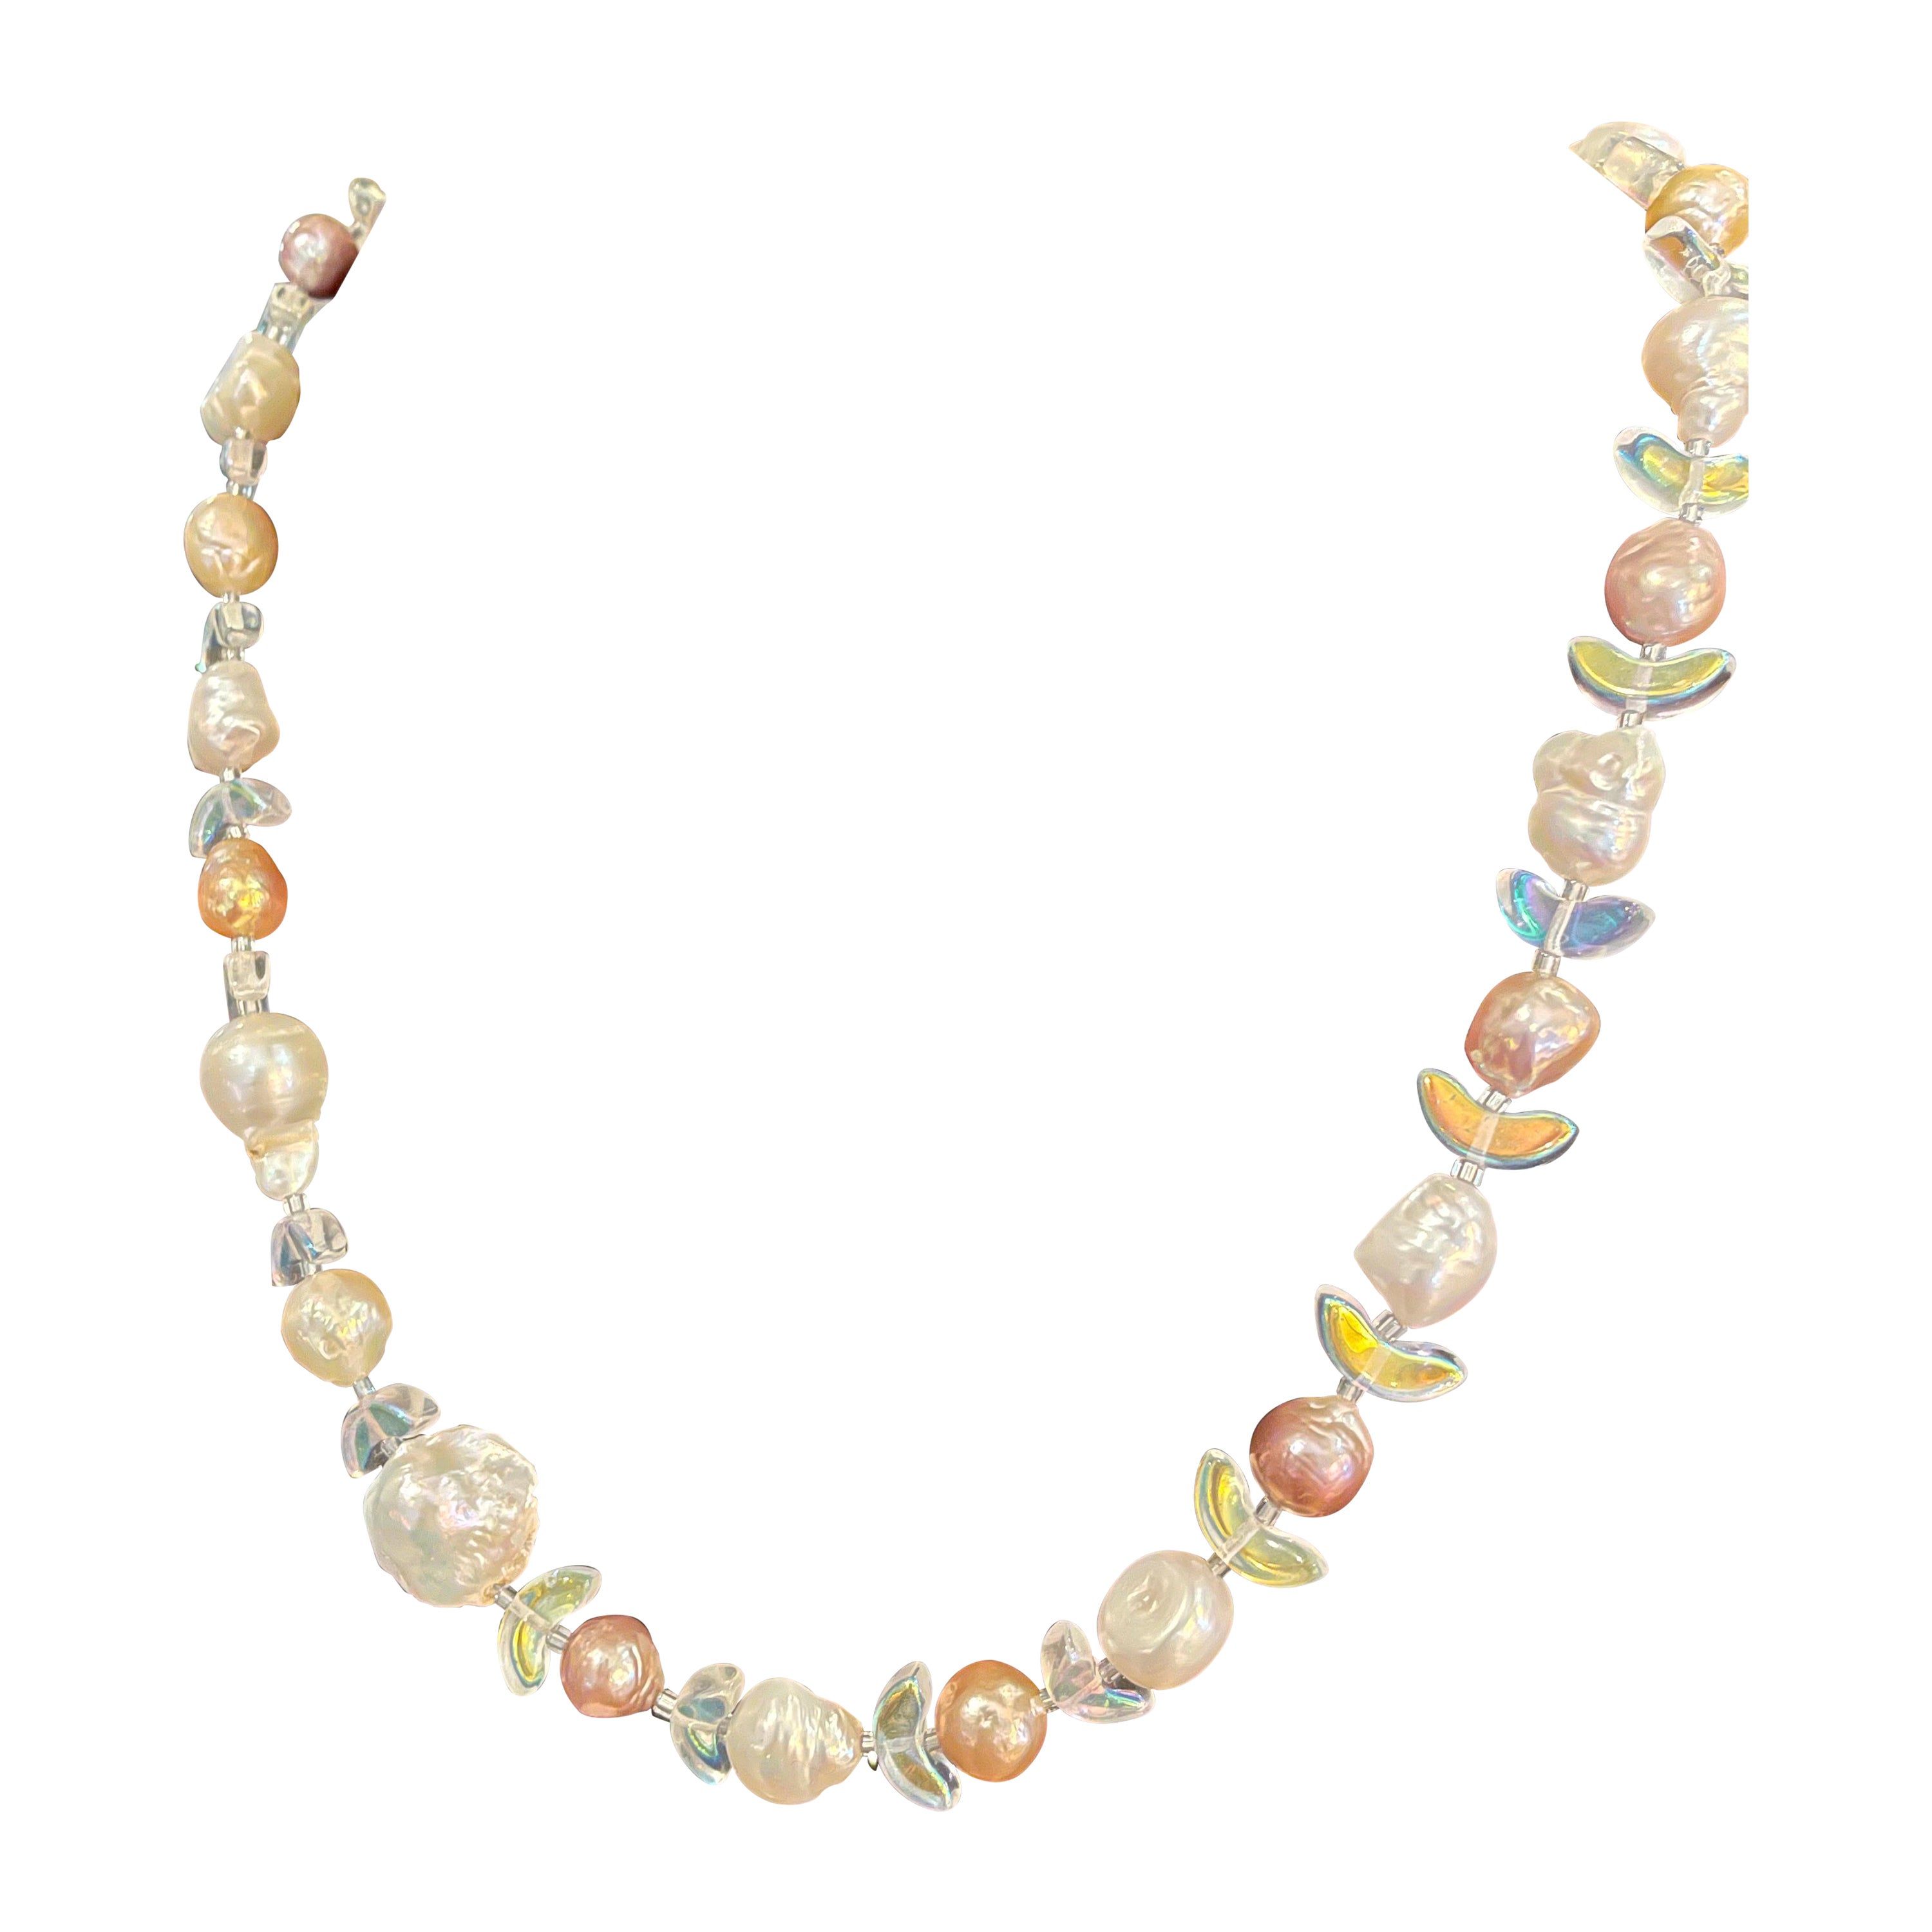 LB large Baroque Pearls Vintage Glass Stunning Handmade One of a Kind Necklace (Collier unique en son genre) en vente